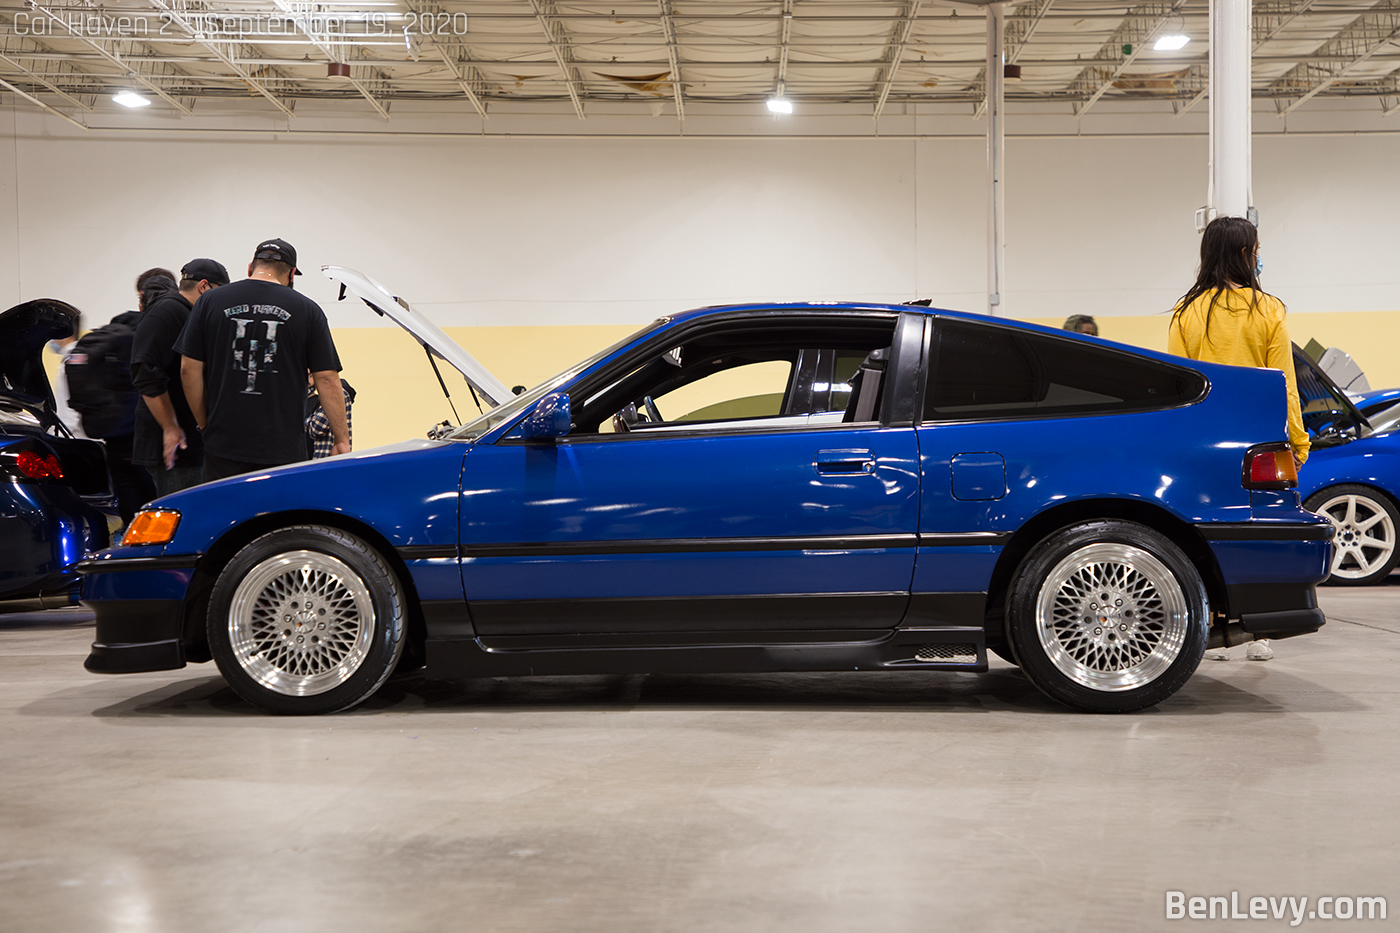 Profile of Blue Honda CRX Si